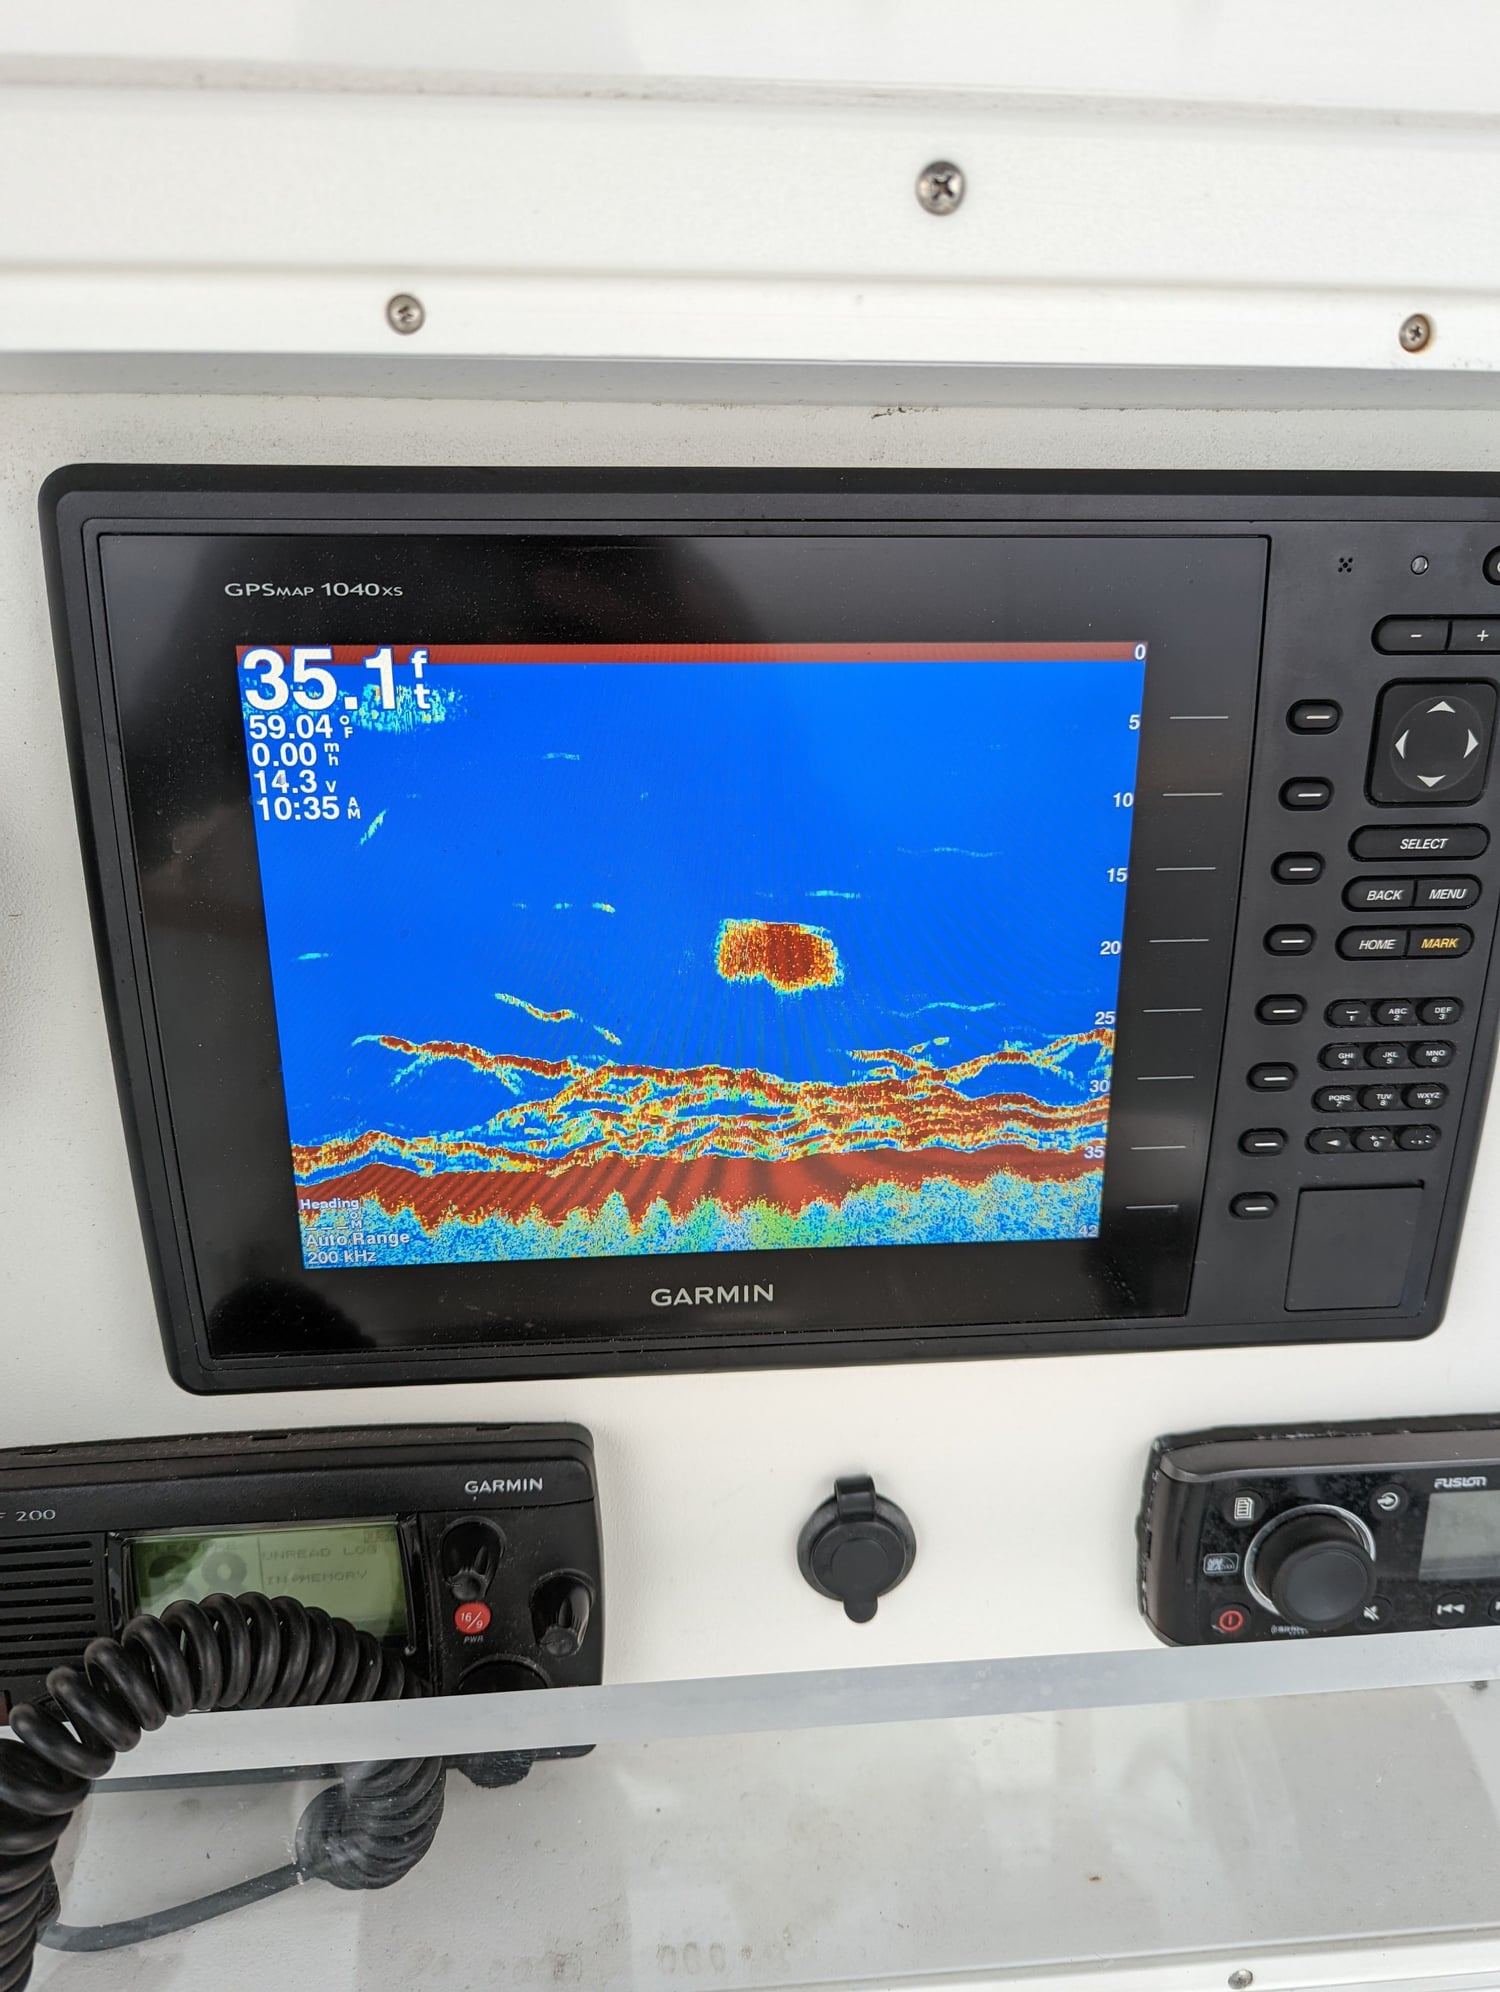 Garmin 1040xs MFD and Garmin HD18 radar - The Hull Truth - Boating and  Fishing Forum